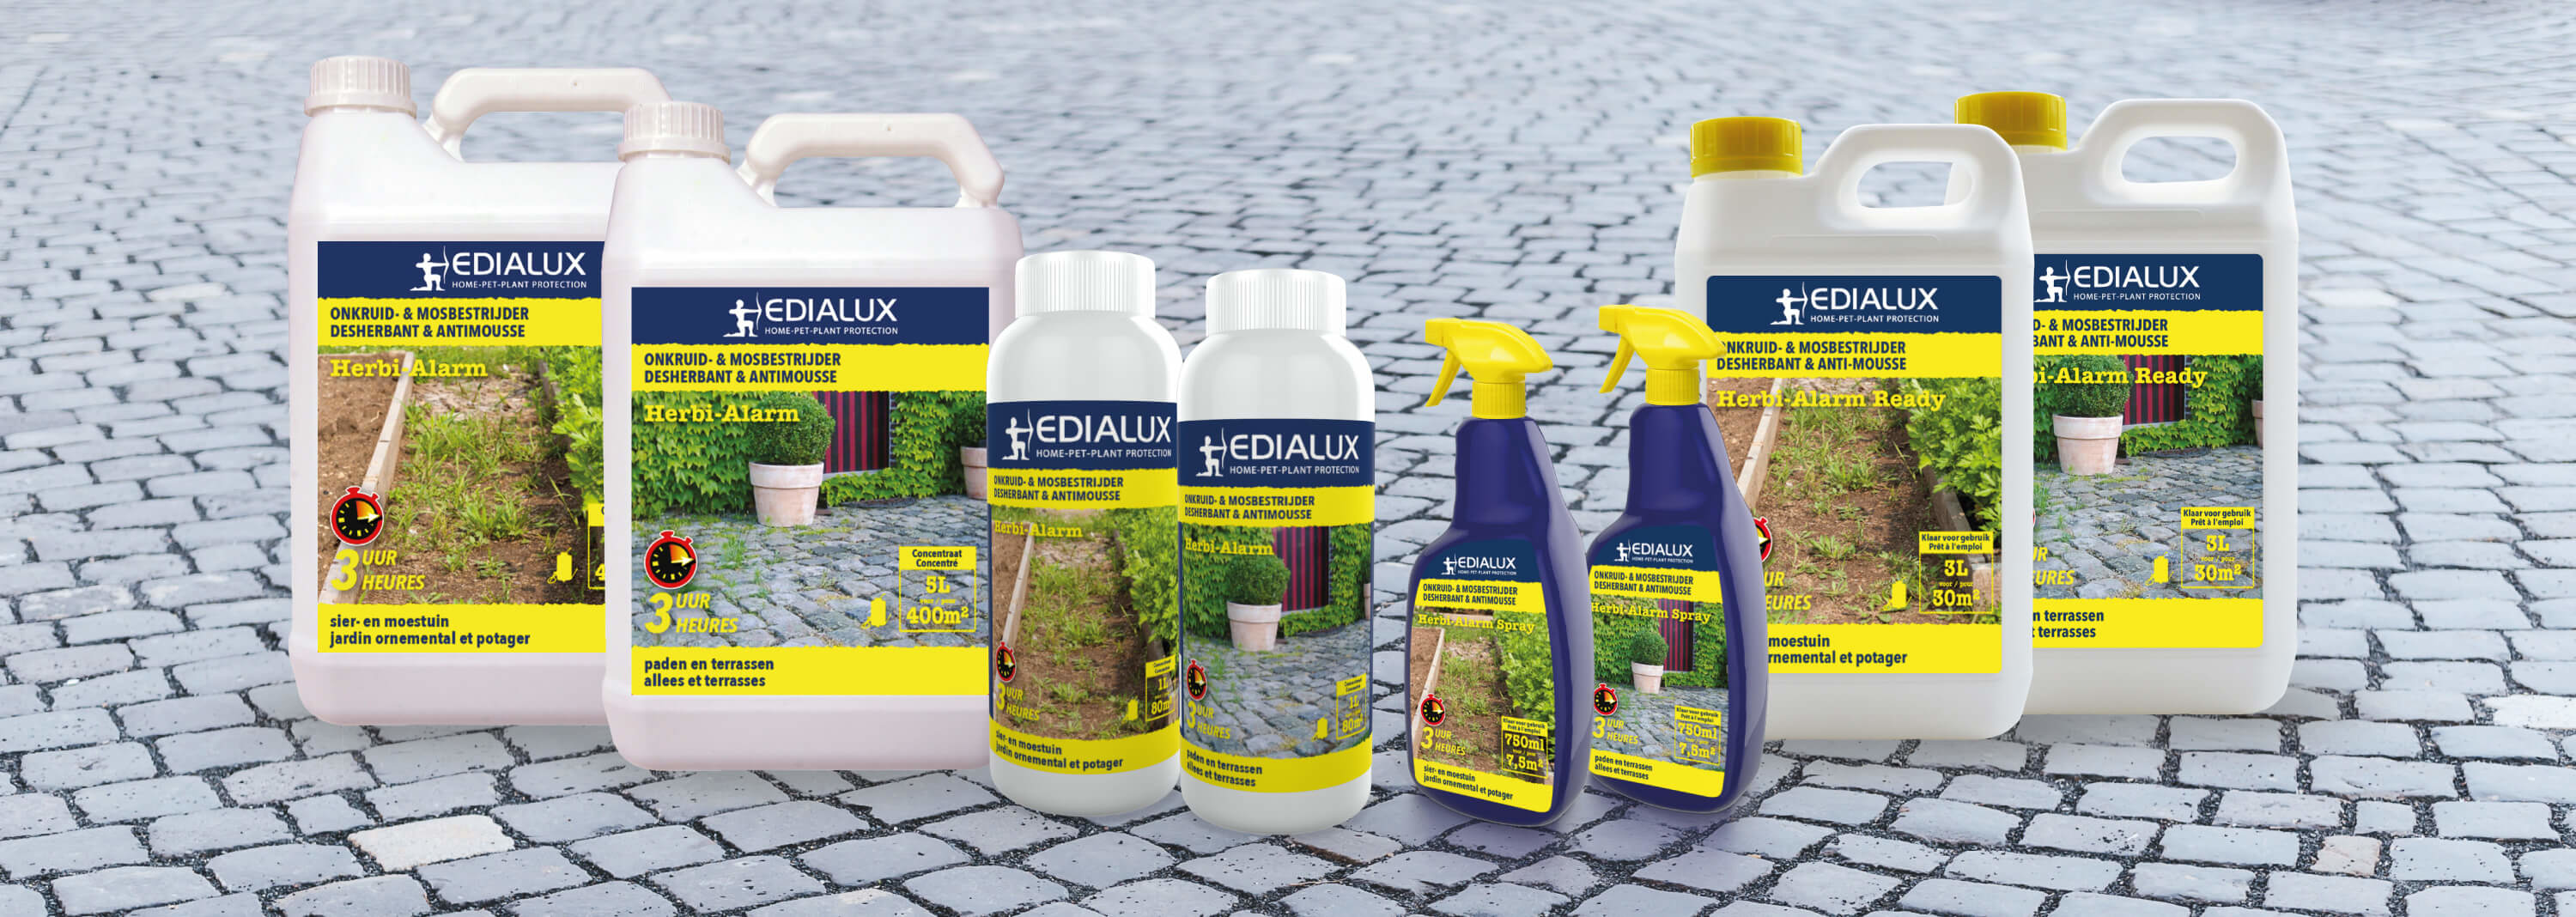 Edialux Herbi-alarm spray ornemental et potager 750 ml